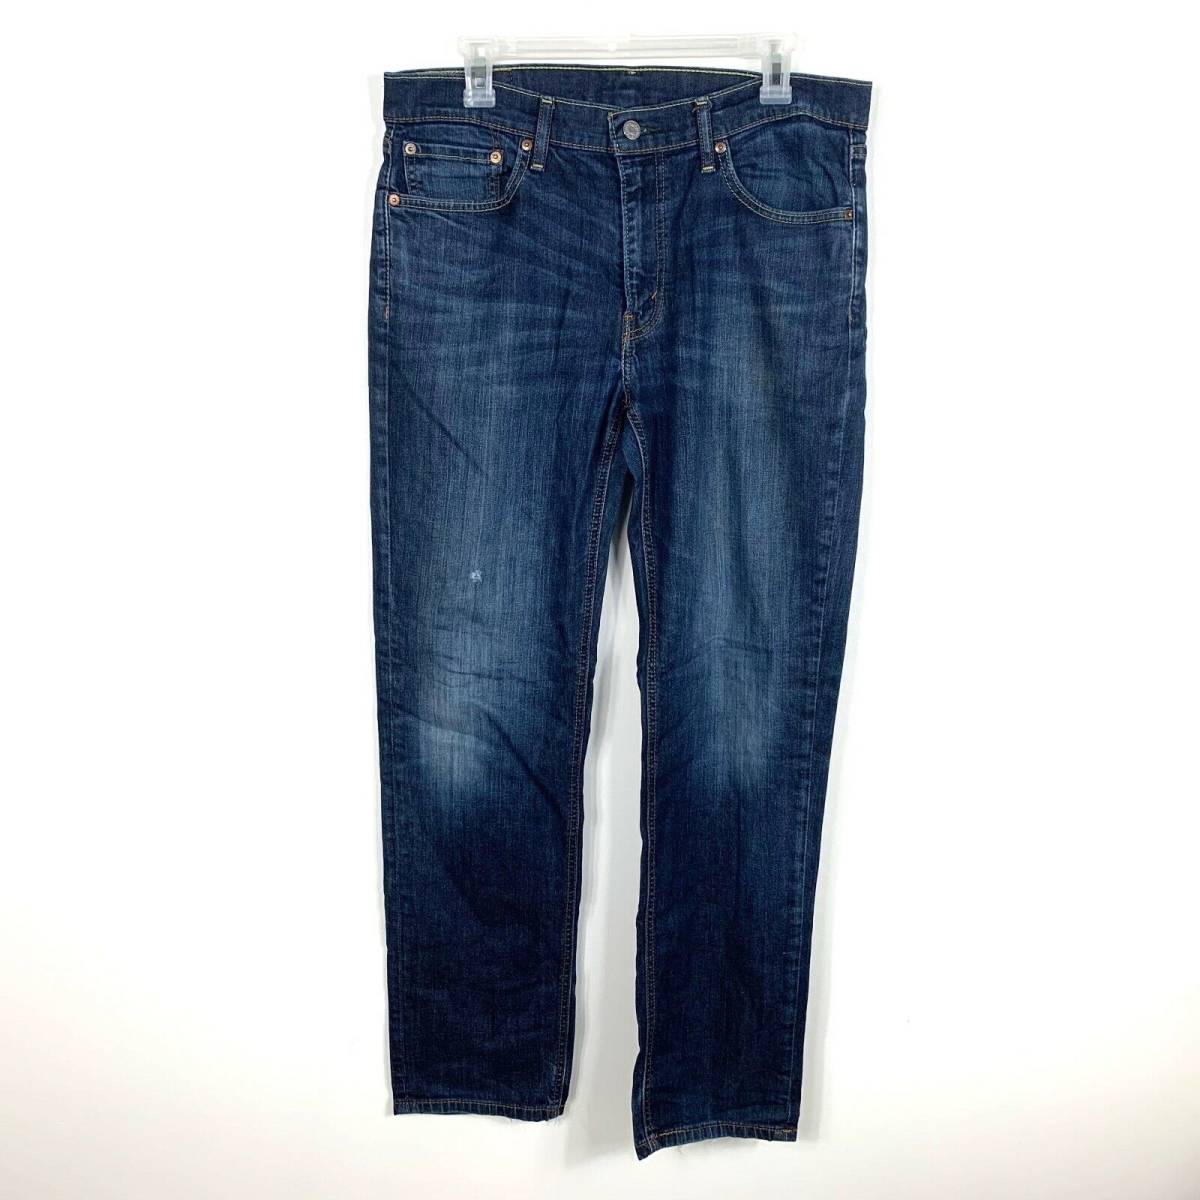 Levis 541 Jeans Mens Size 33 Distressed Cotton Elastane Stretch